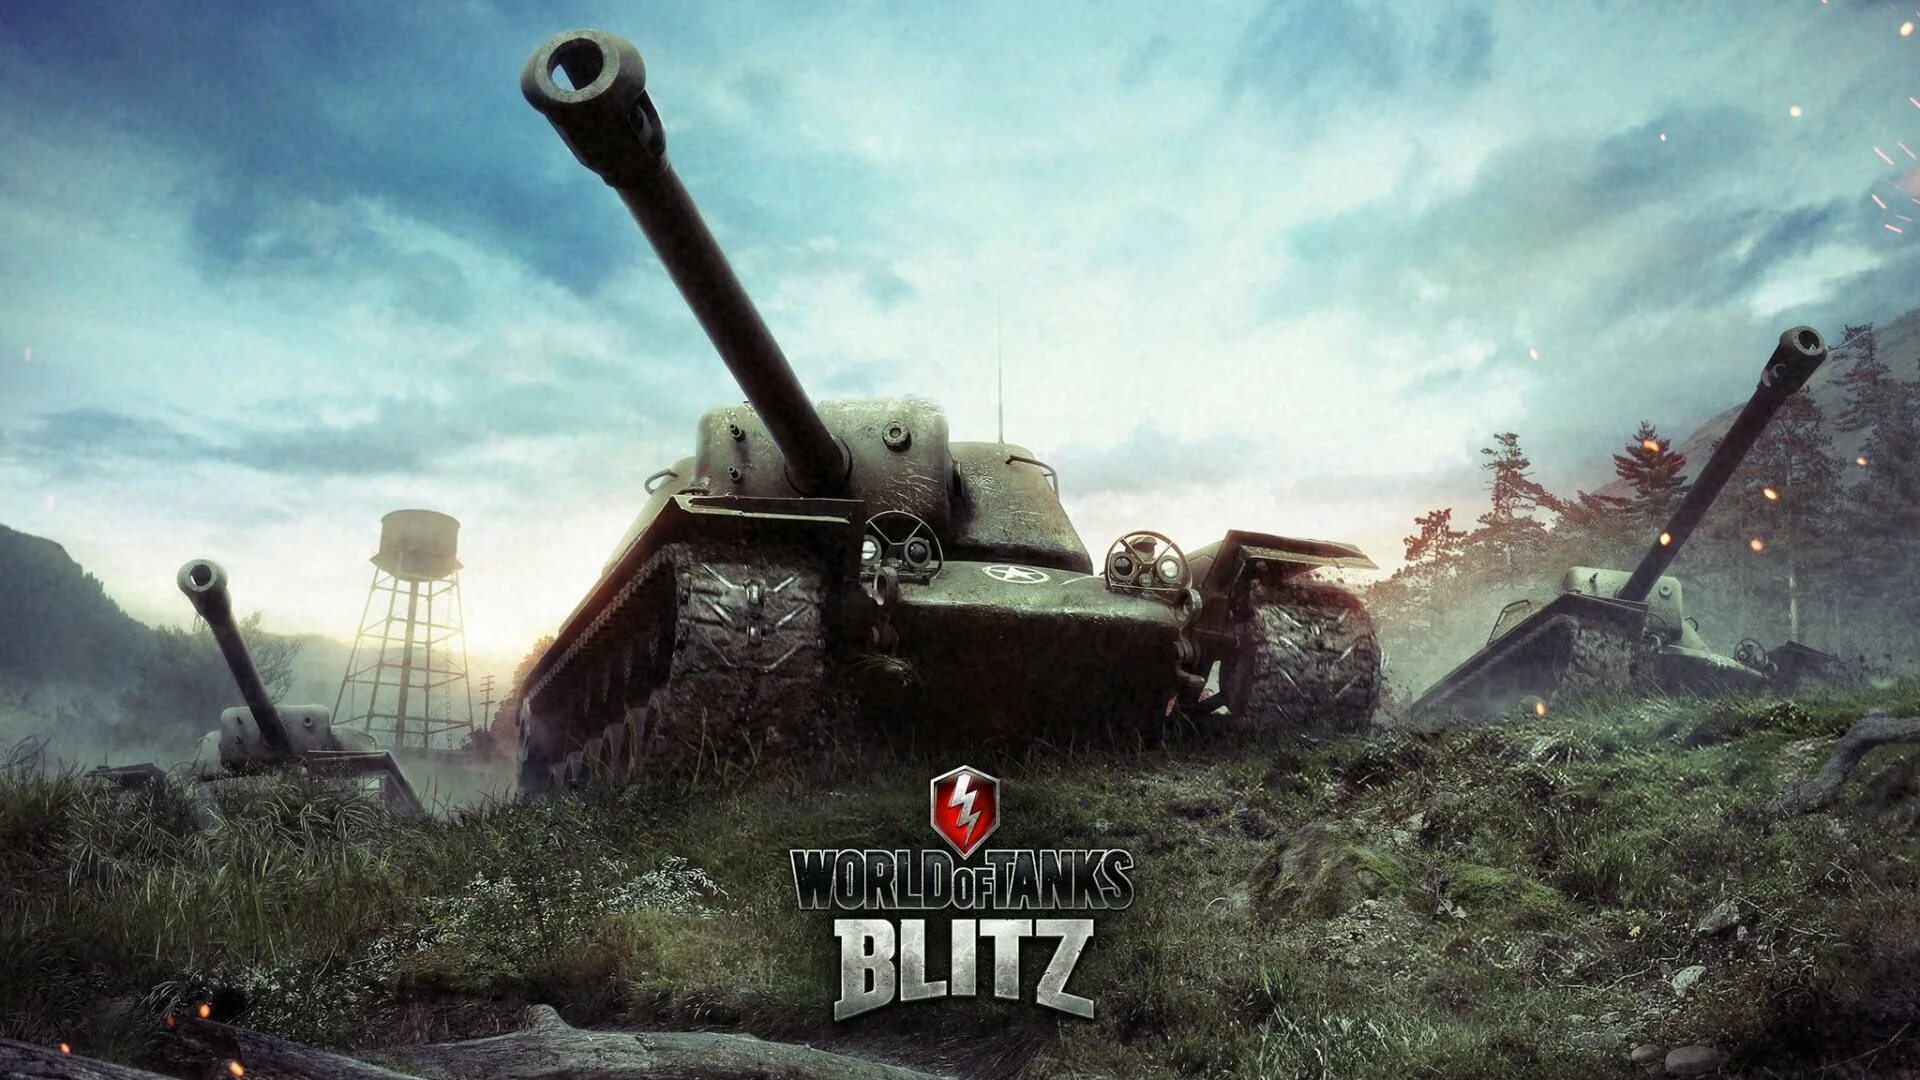 Ворлд оф танк блиц. Игра World of Tanks Blitz. Танки из World of Tanks Blitz. Танк из игры World of Tanks Blitz.